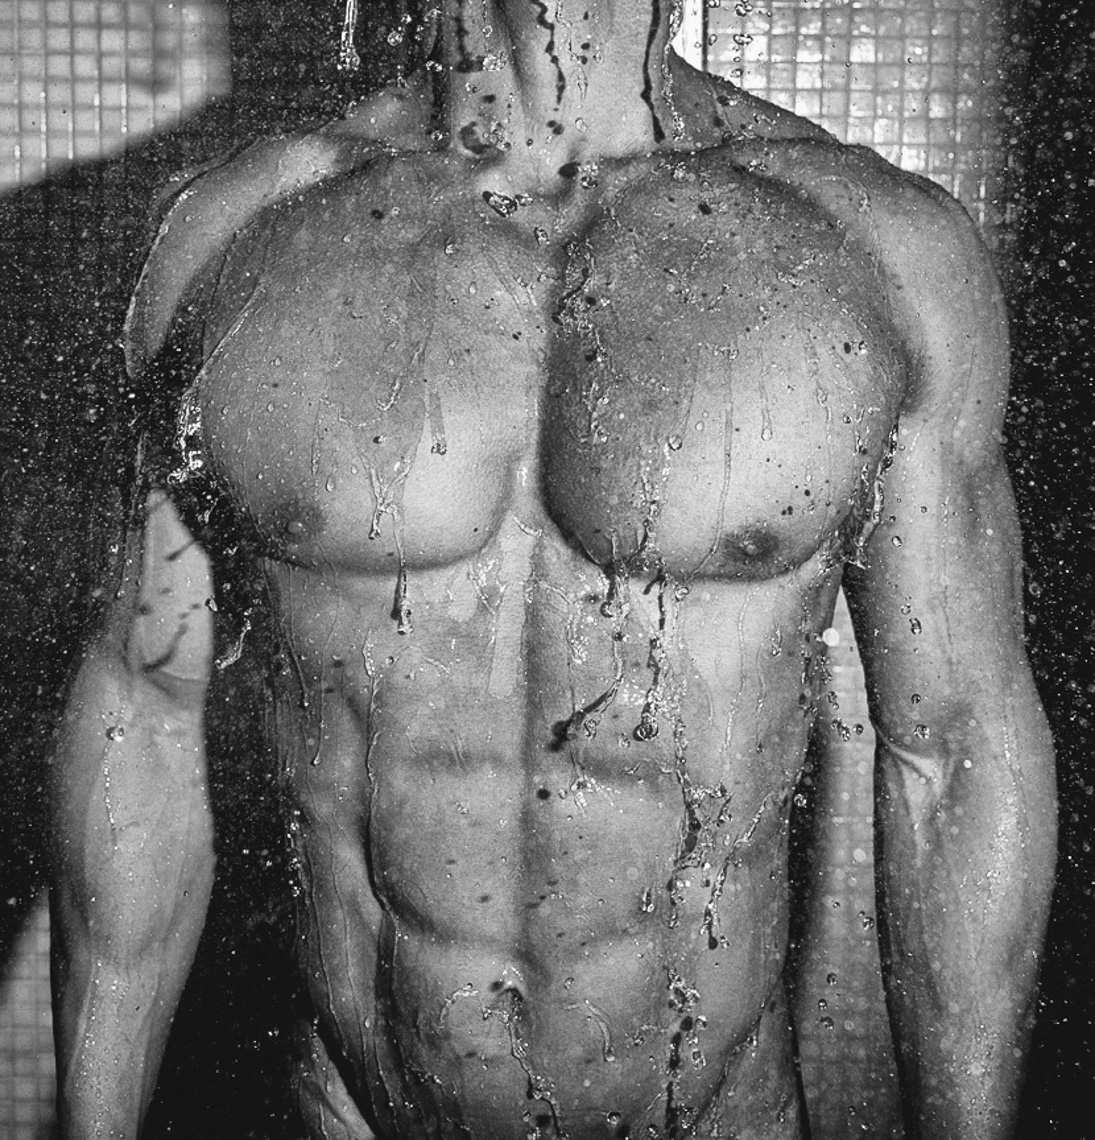 Torso of fit male body in shower 